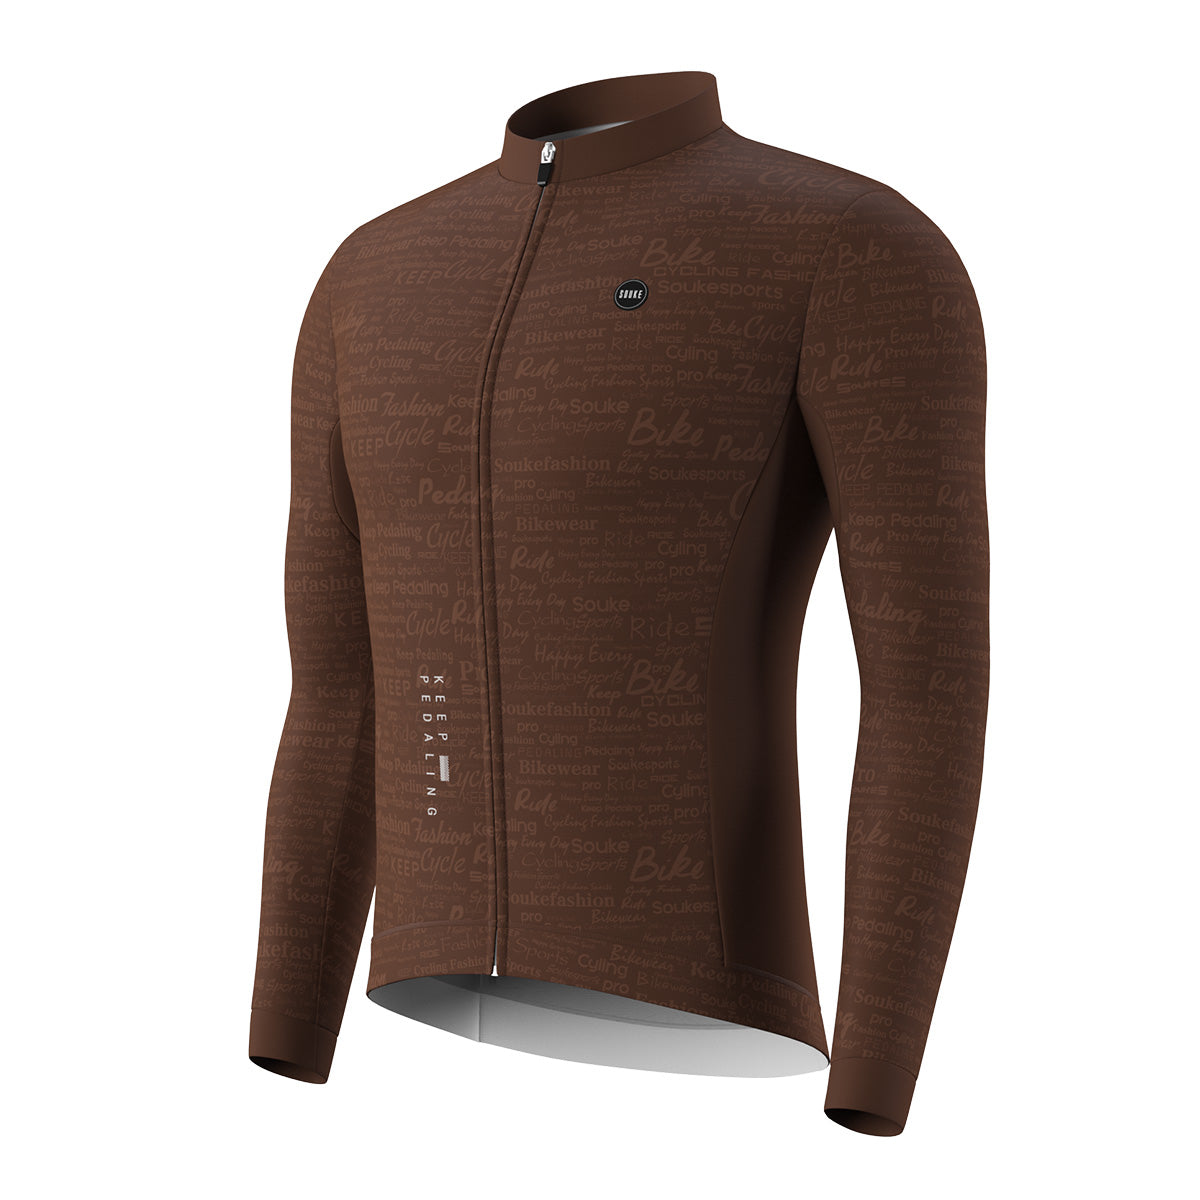 Graphene Cycling Inspirational LS Fleece-Lined Jersey WJ1207-Maroon (6793685762161)